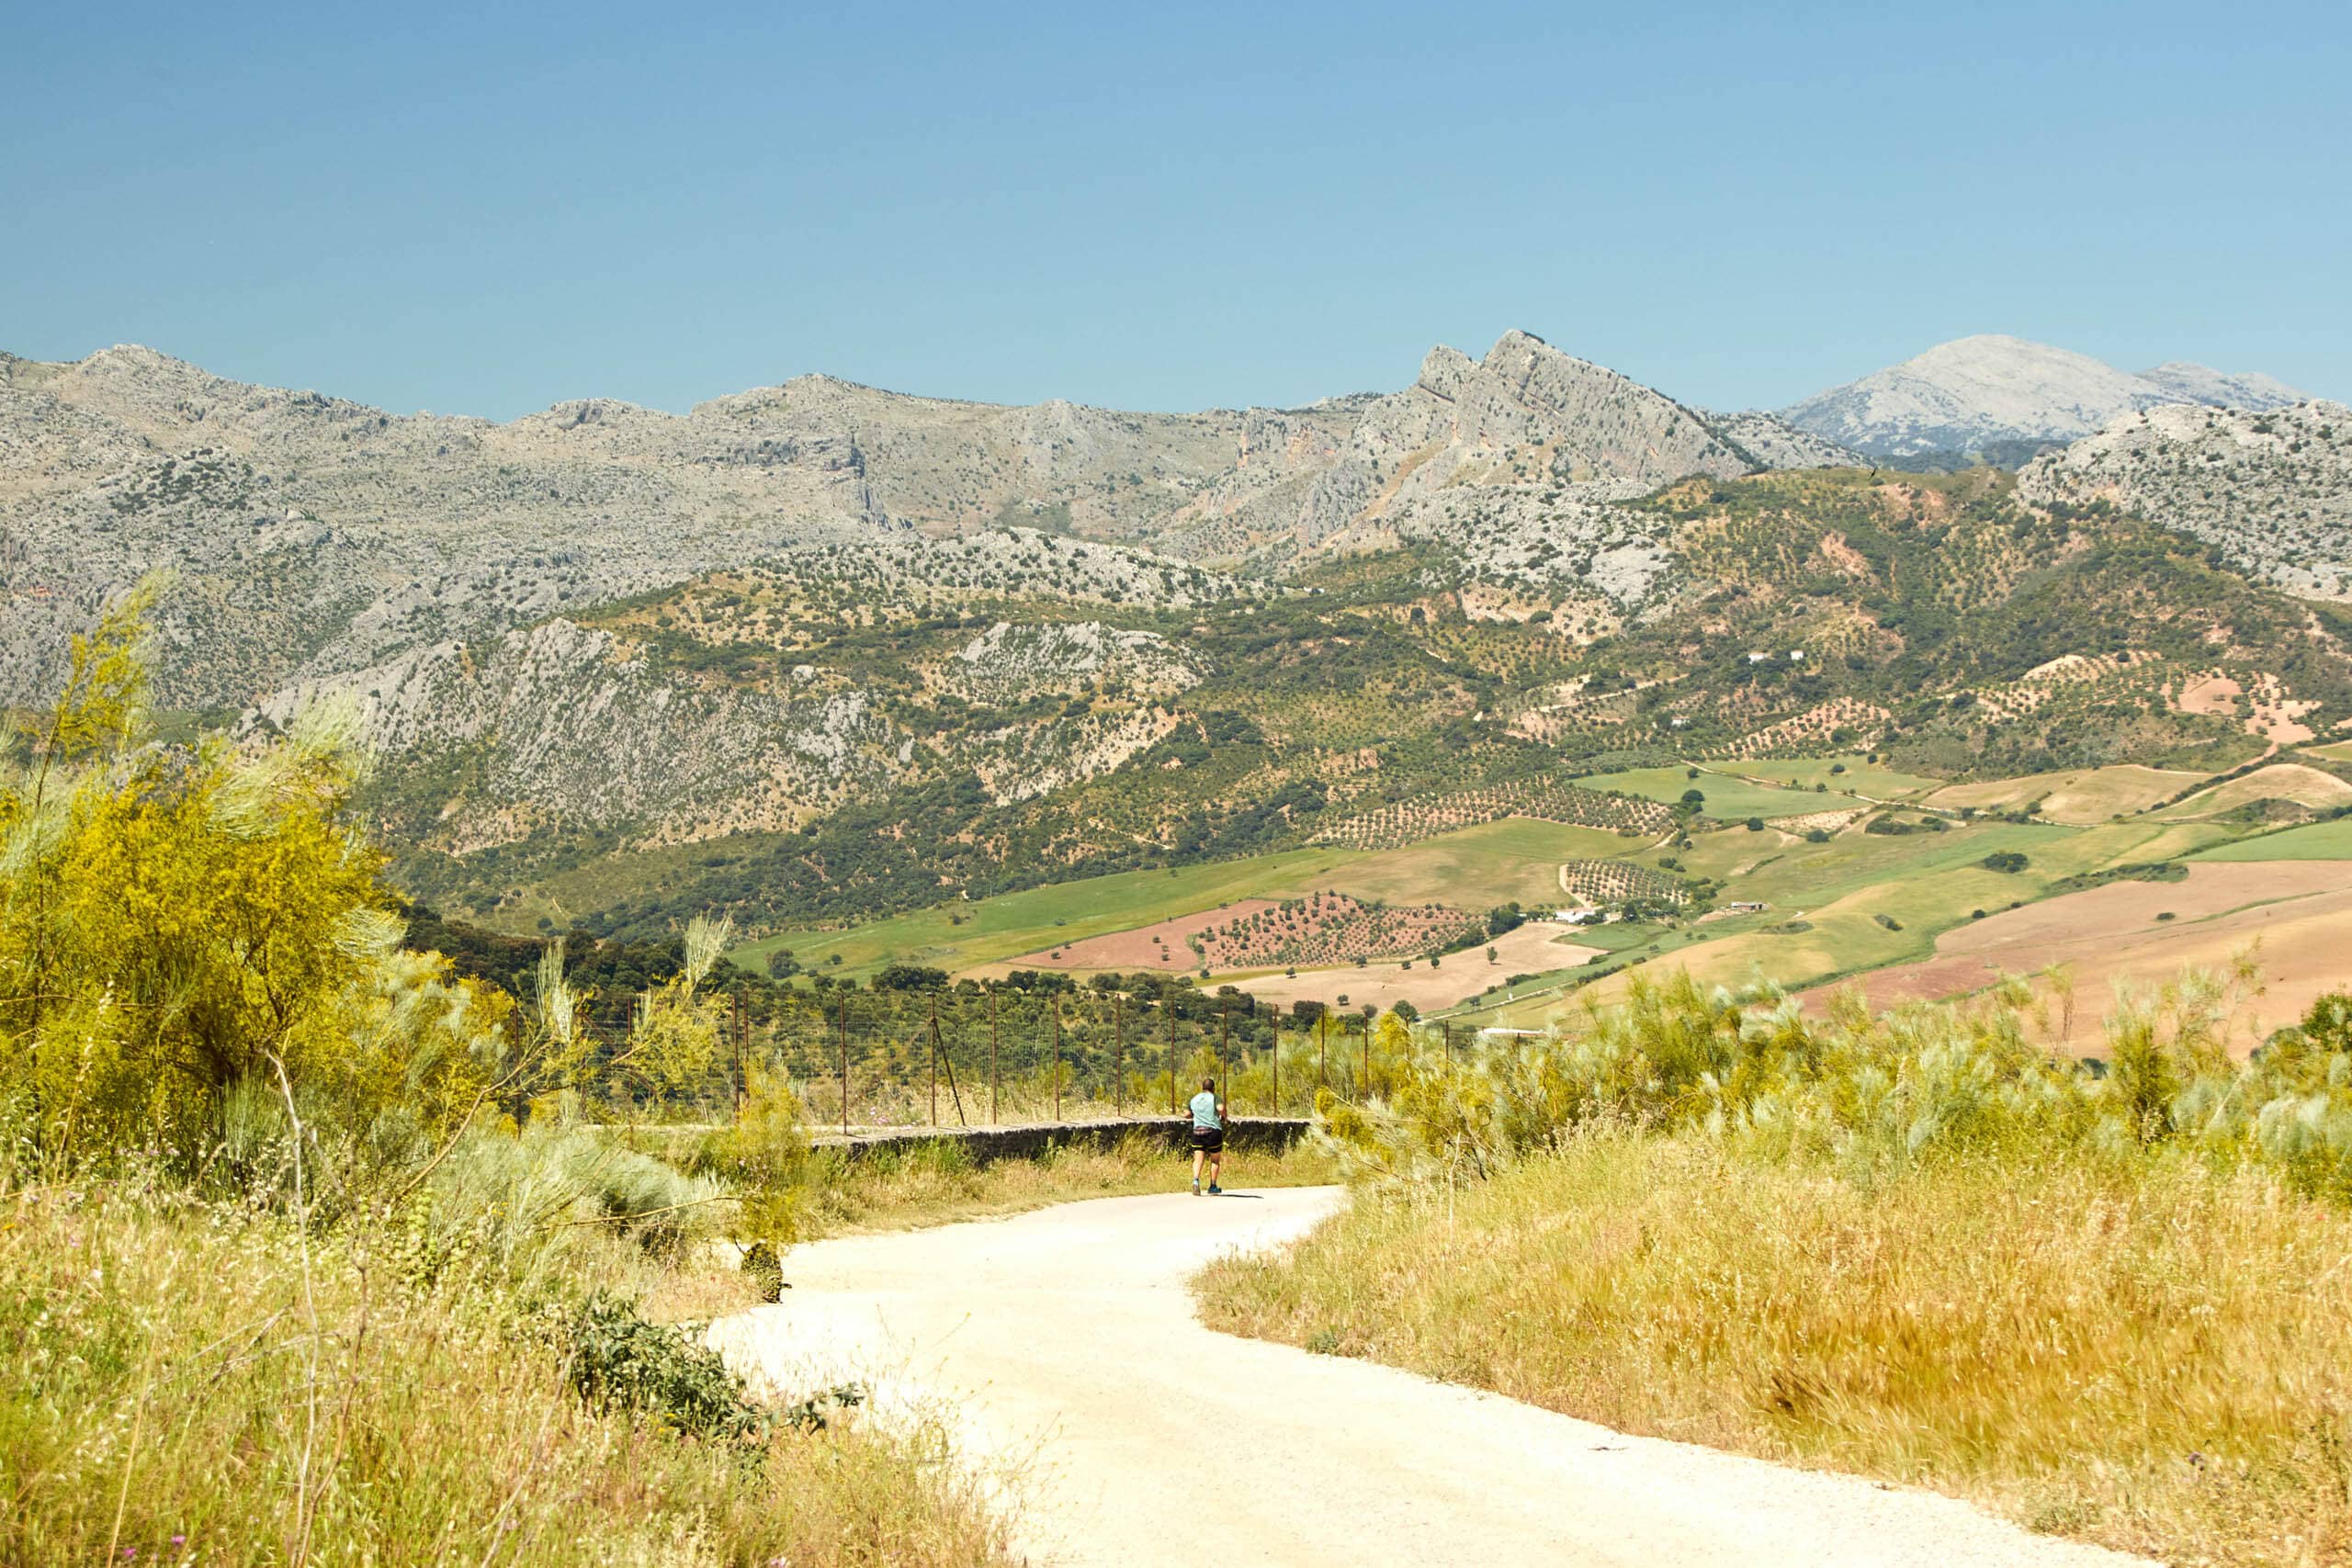 Walker on a trail leading into the Serranía de Ronda